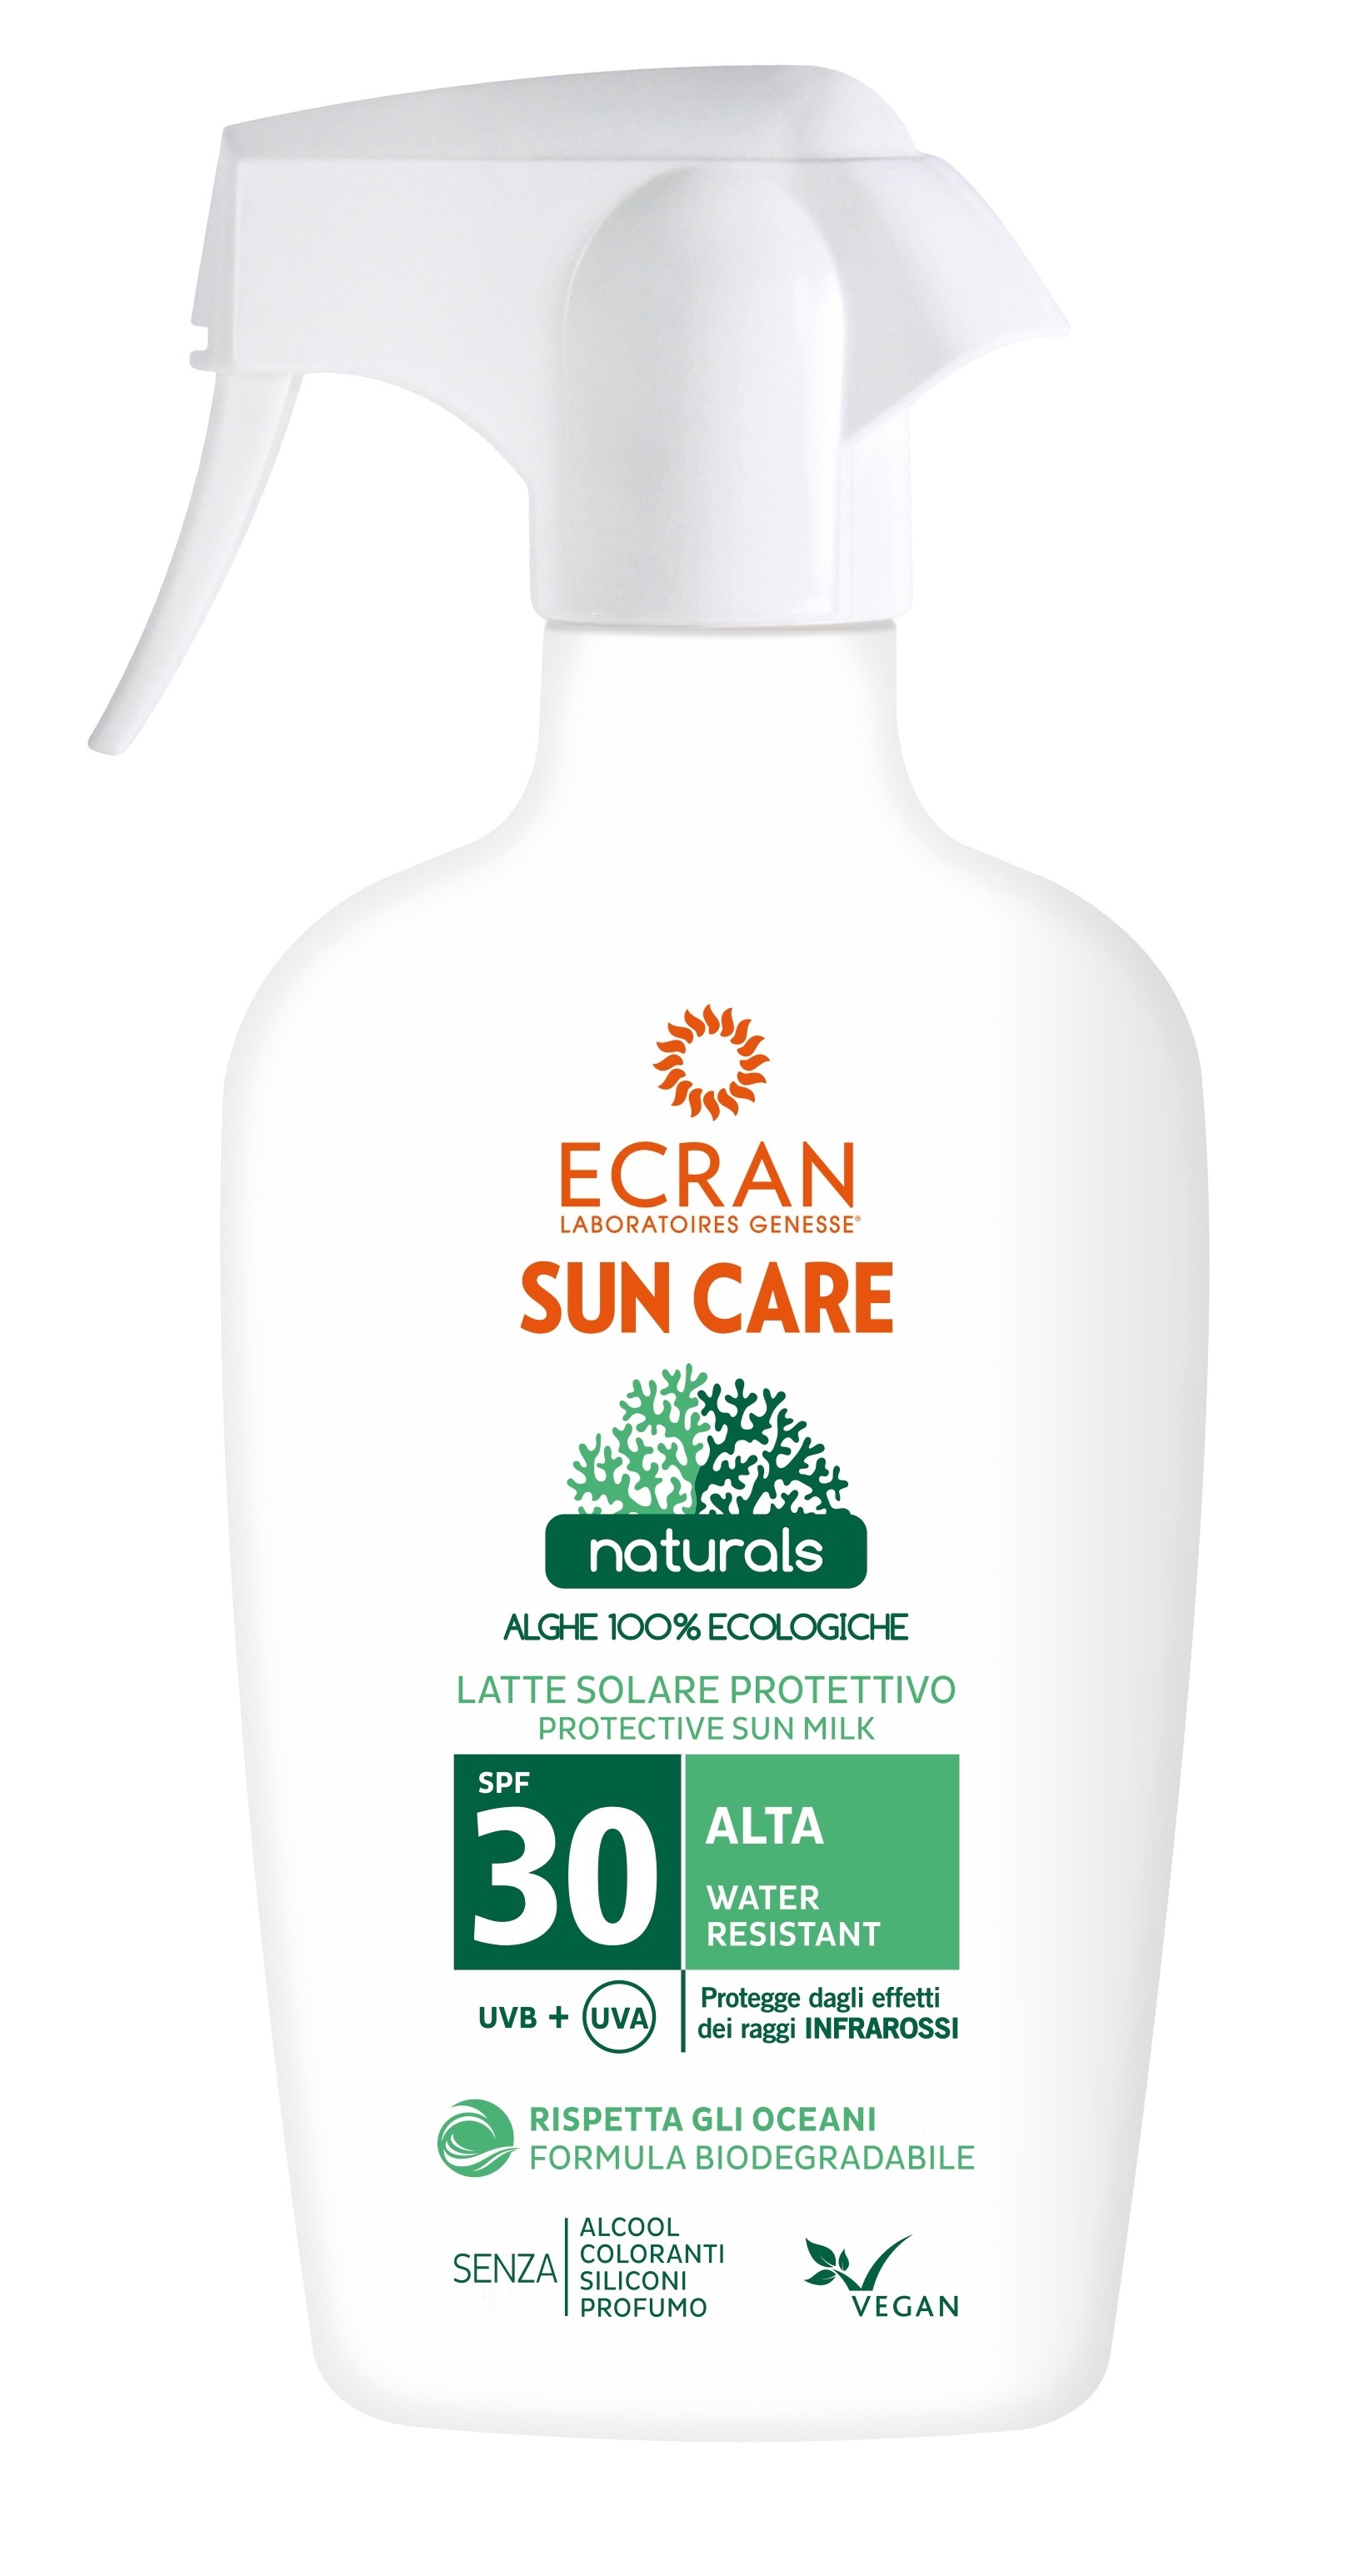 Ecran Naturals Vegan Protective Sun Milk SPF30